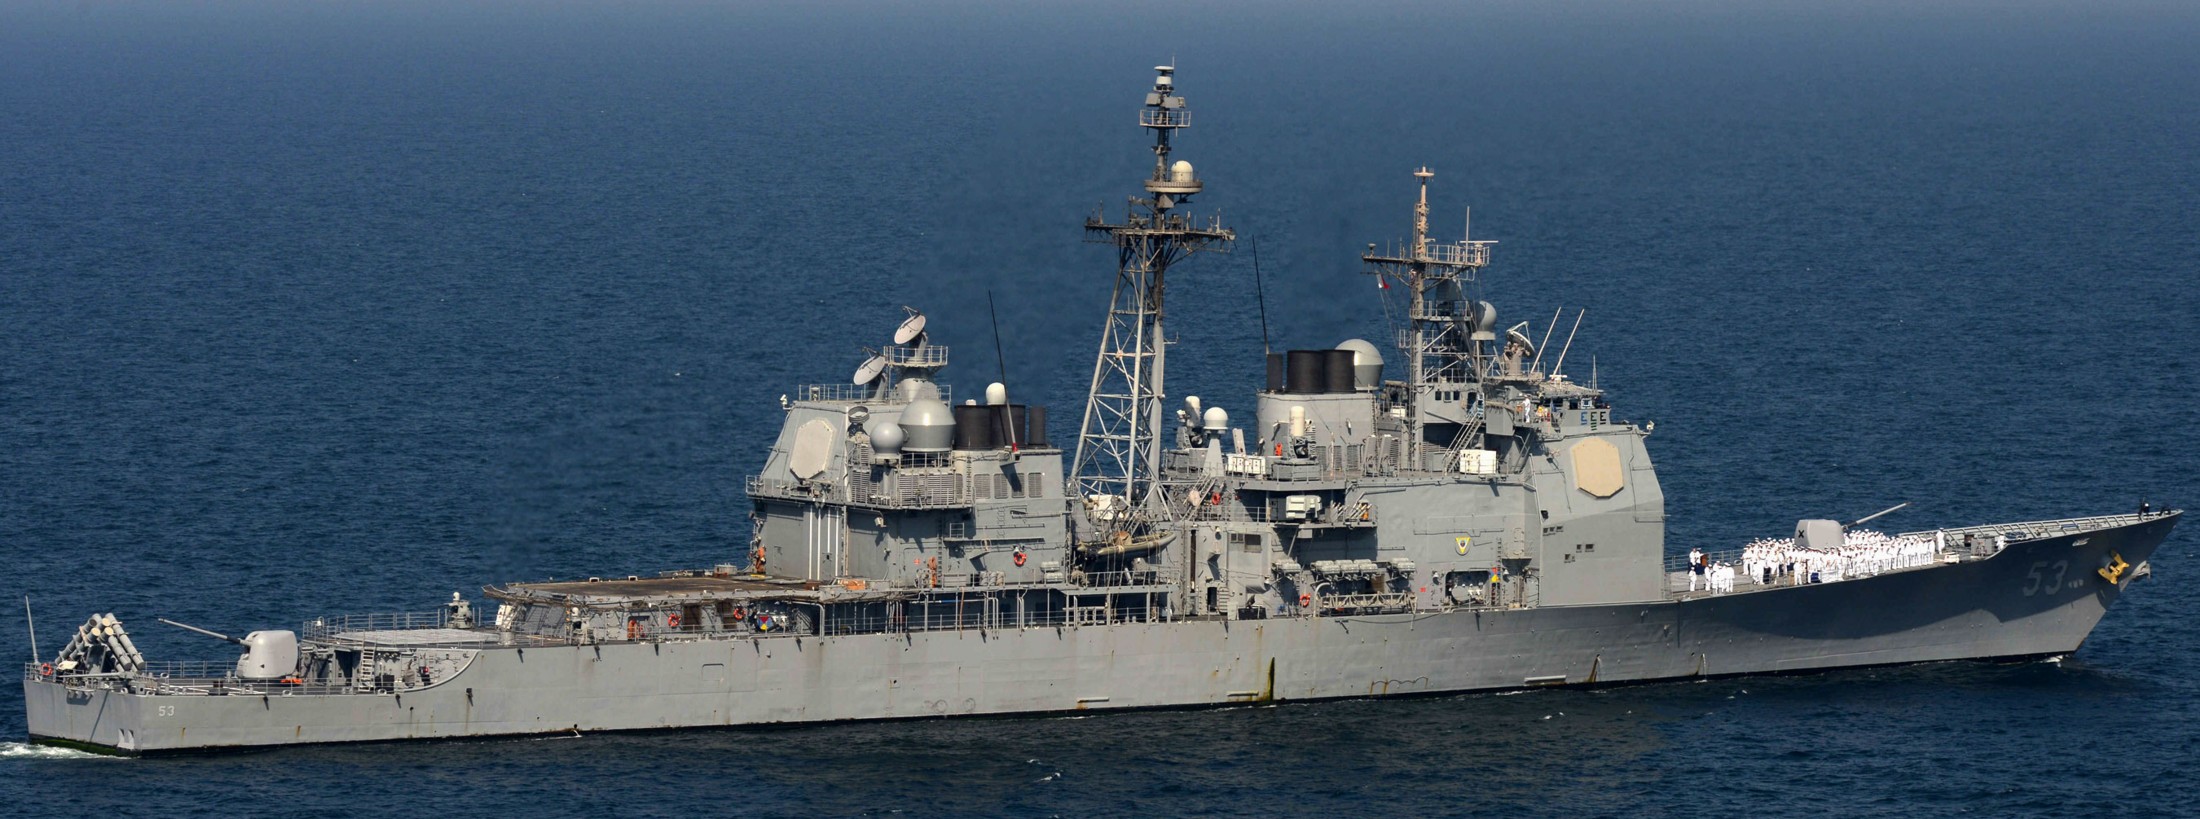 cg-53 uss mobile bay ticonderoga class guided missile cruiser aegis us navy arabian sea 70